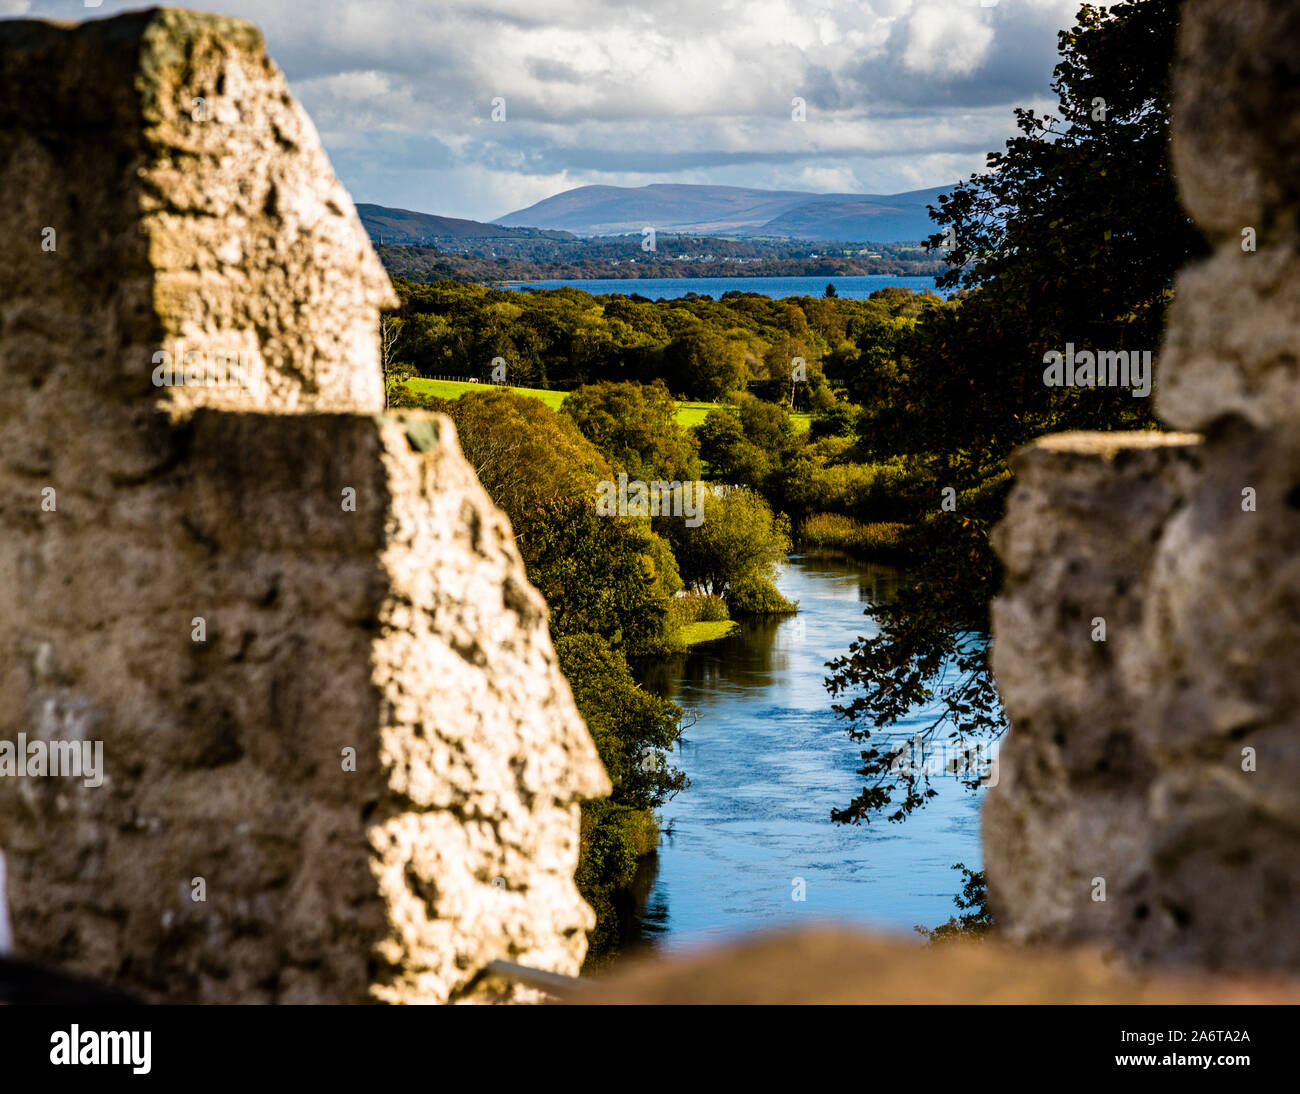 View on the River Laune from the Dunloe Hotel near Killarney, Ireland Stock Photo